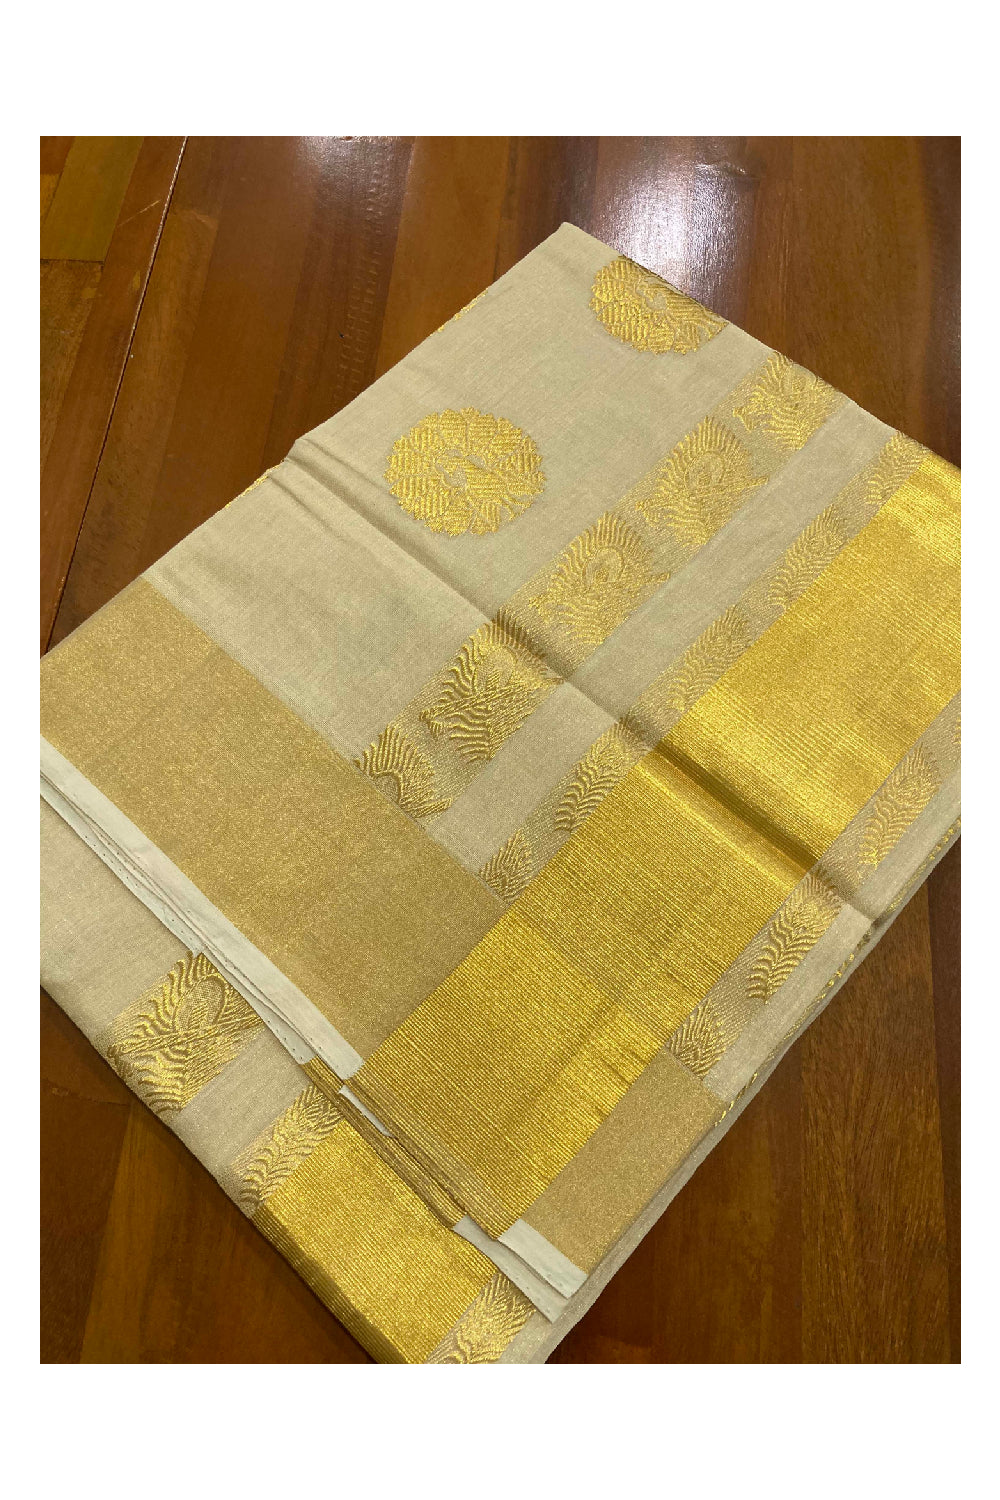 Southloom Balaramapuram Handloom Tissue Heavy Work Saree with Peacock Motifs